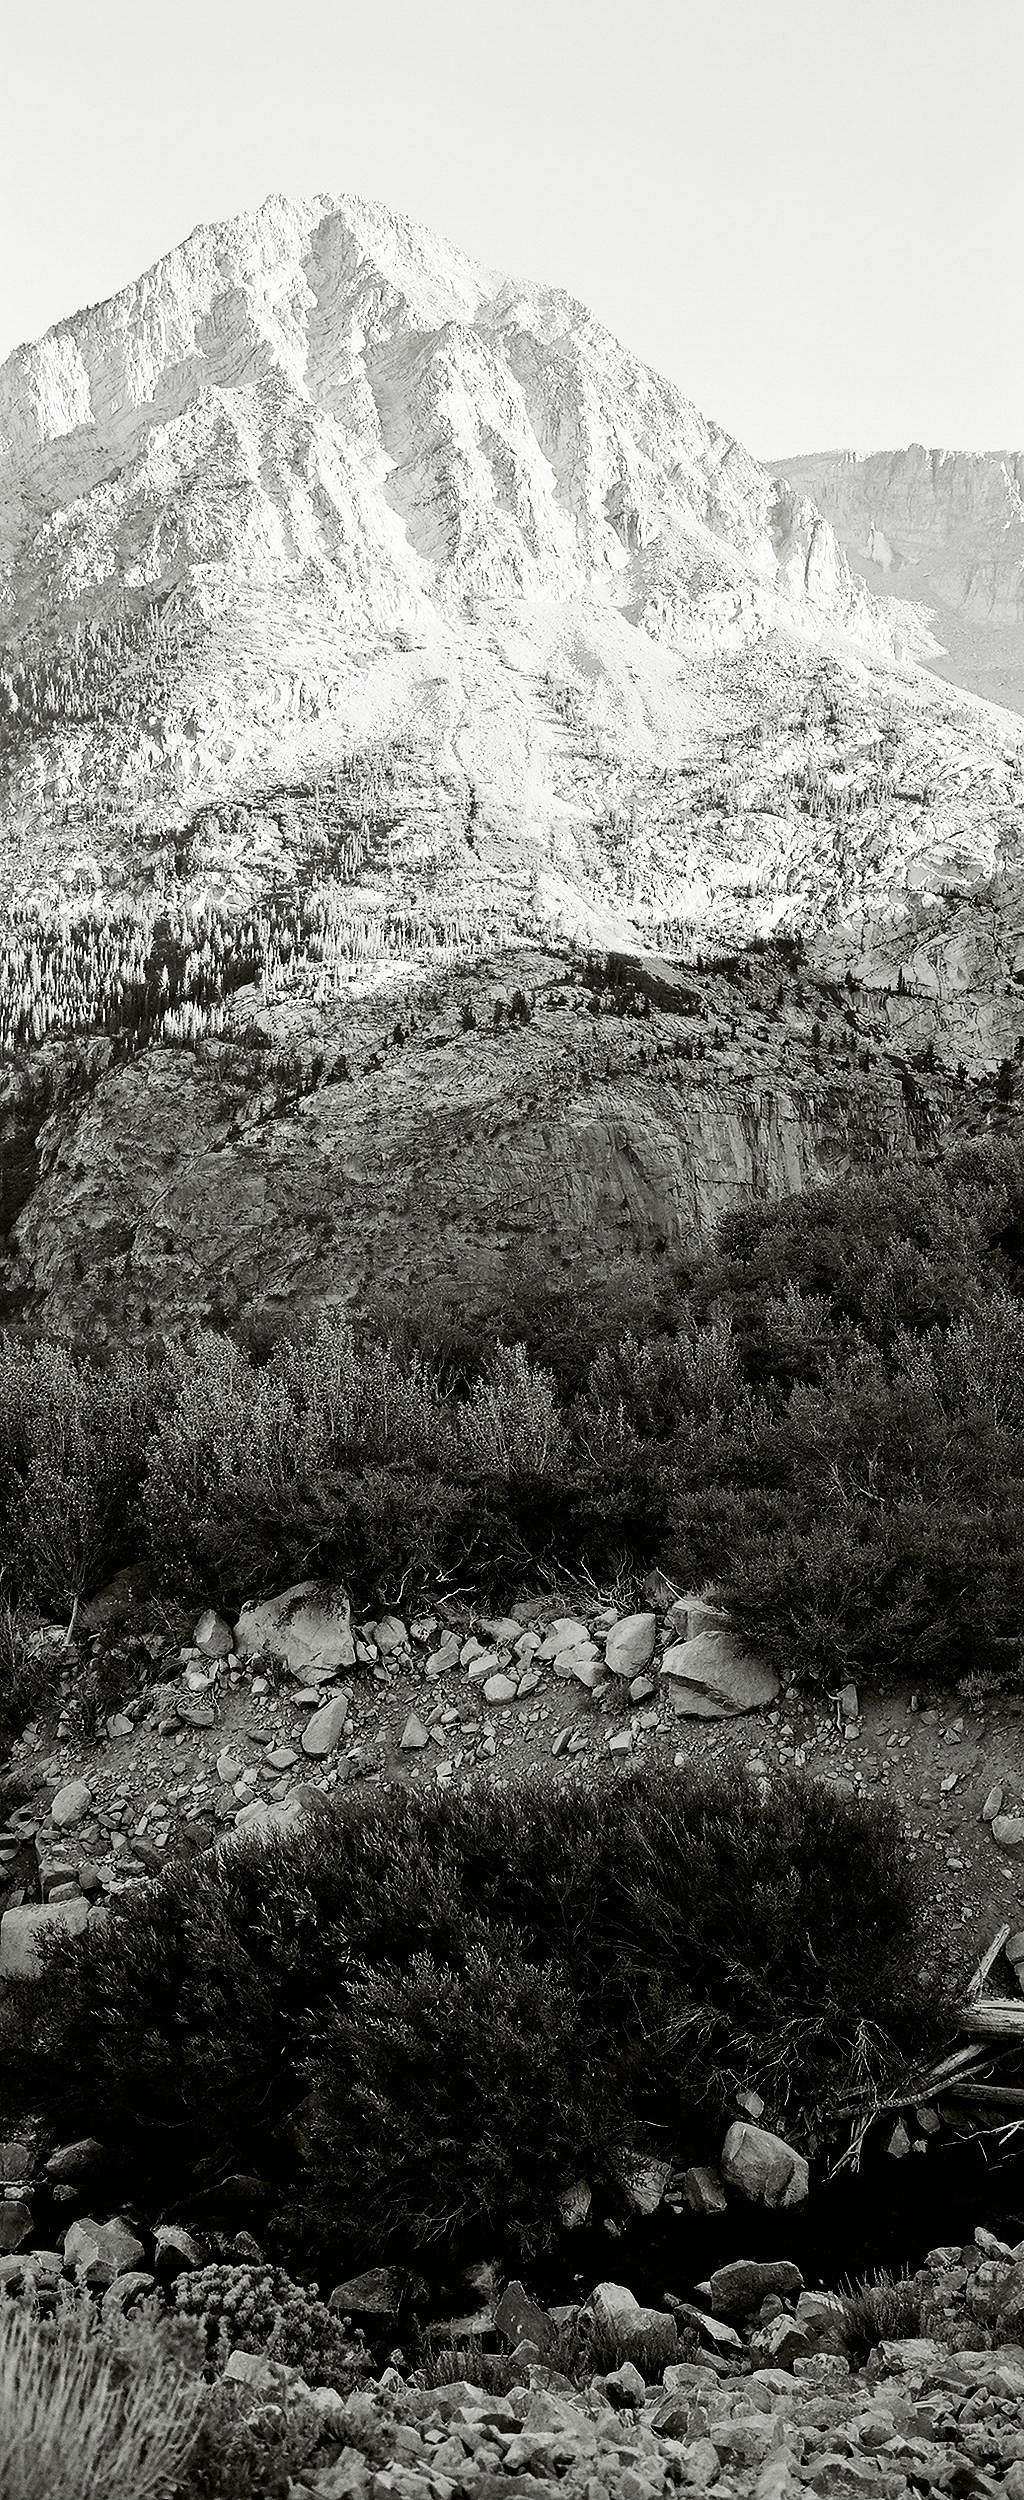 Lee Vining Canyon / Tioga Pass